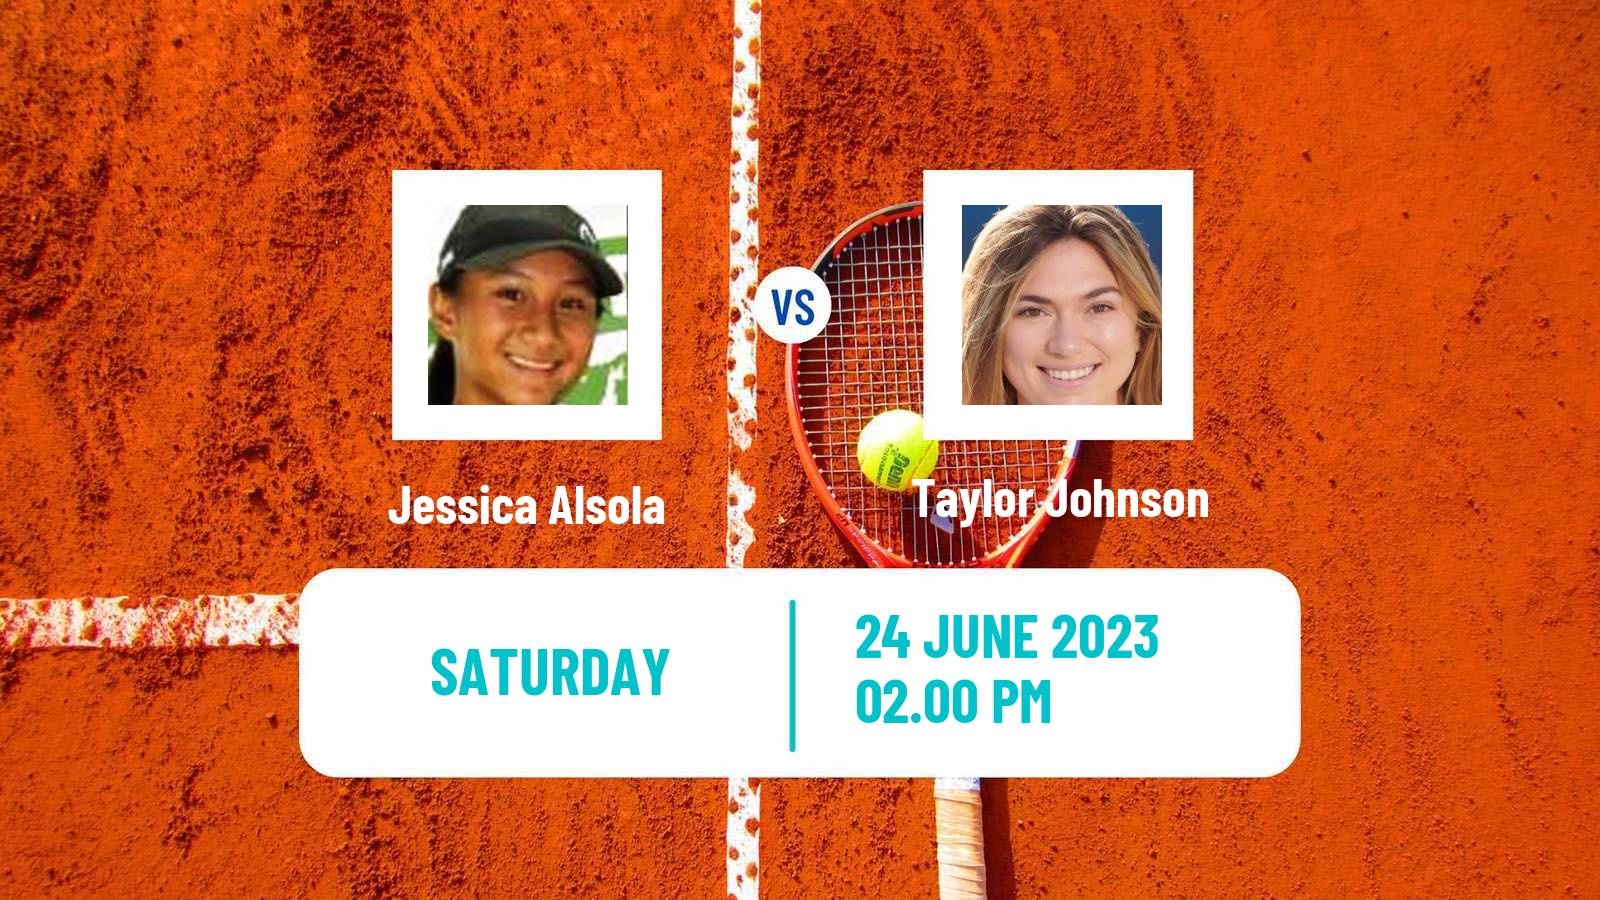 Tennis ITF W15 Los Angeles Ca Women Jessica Alsola - Taylor Johnson